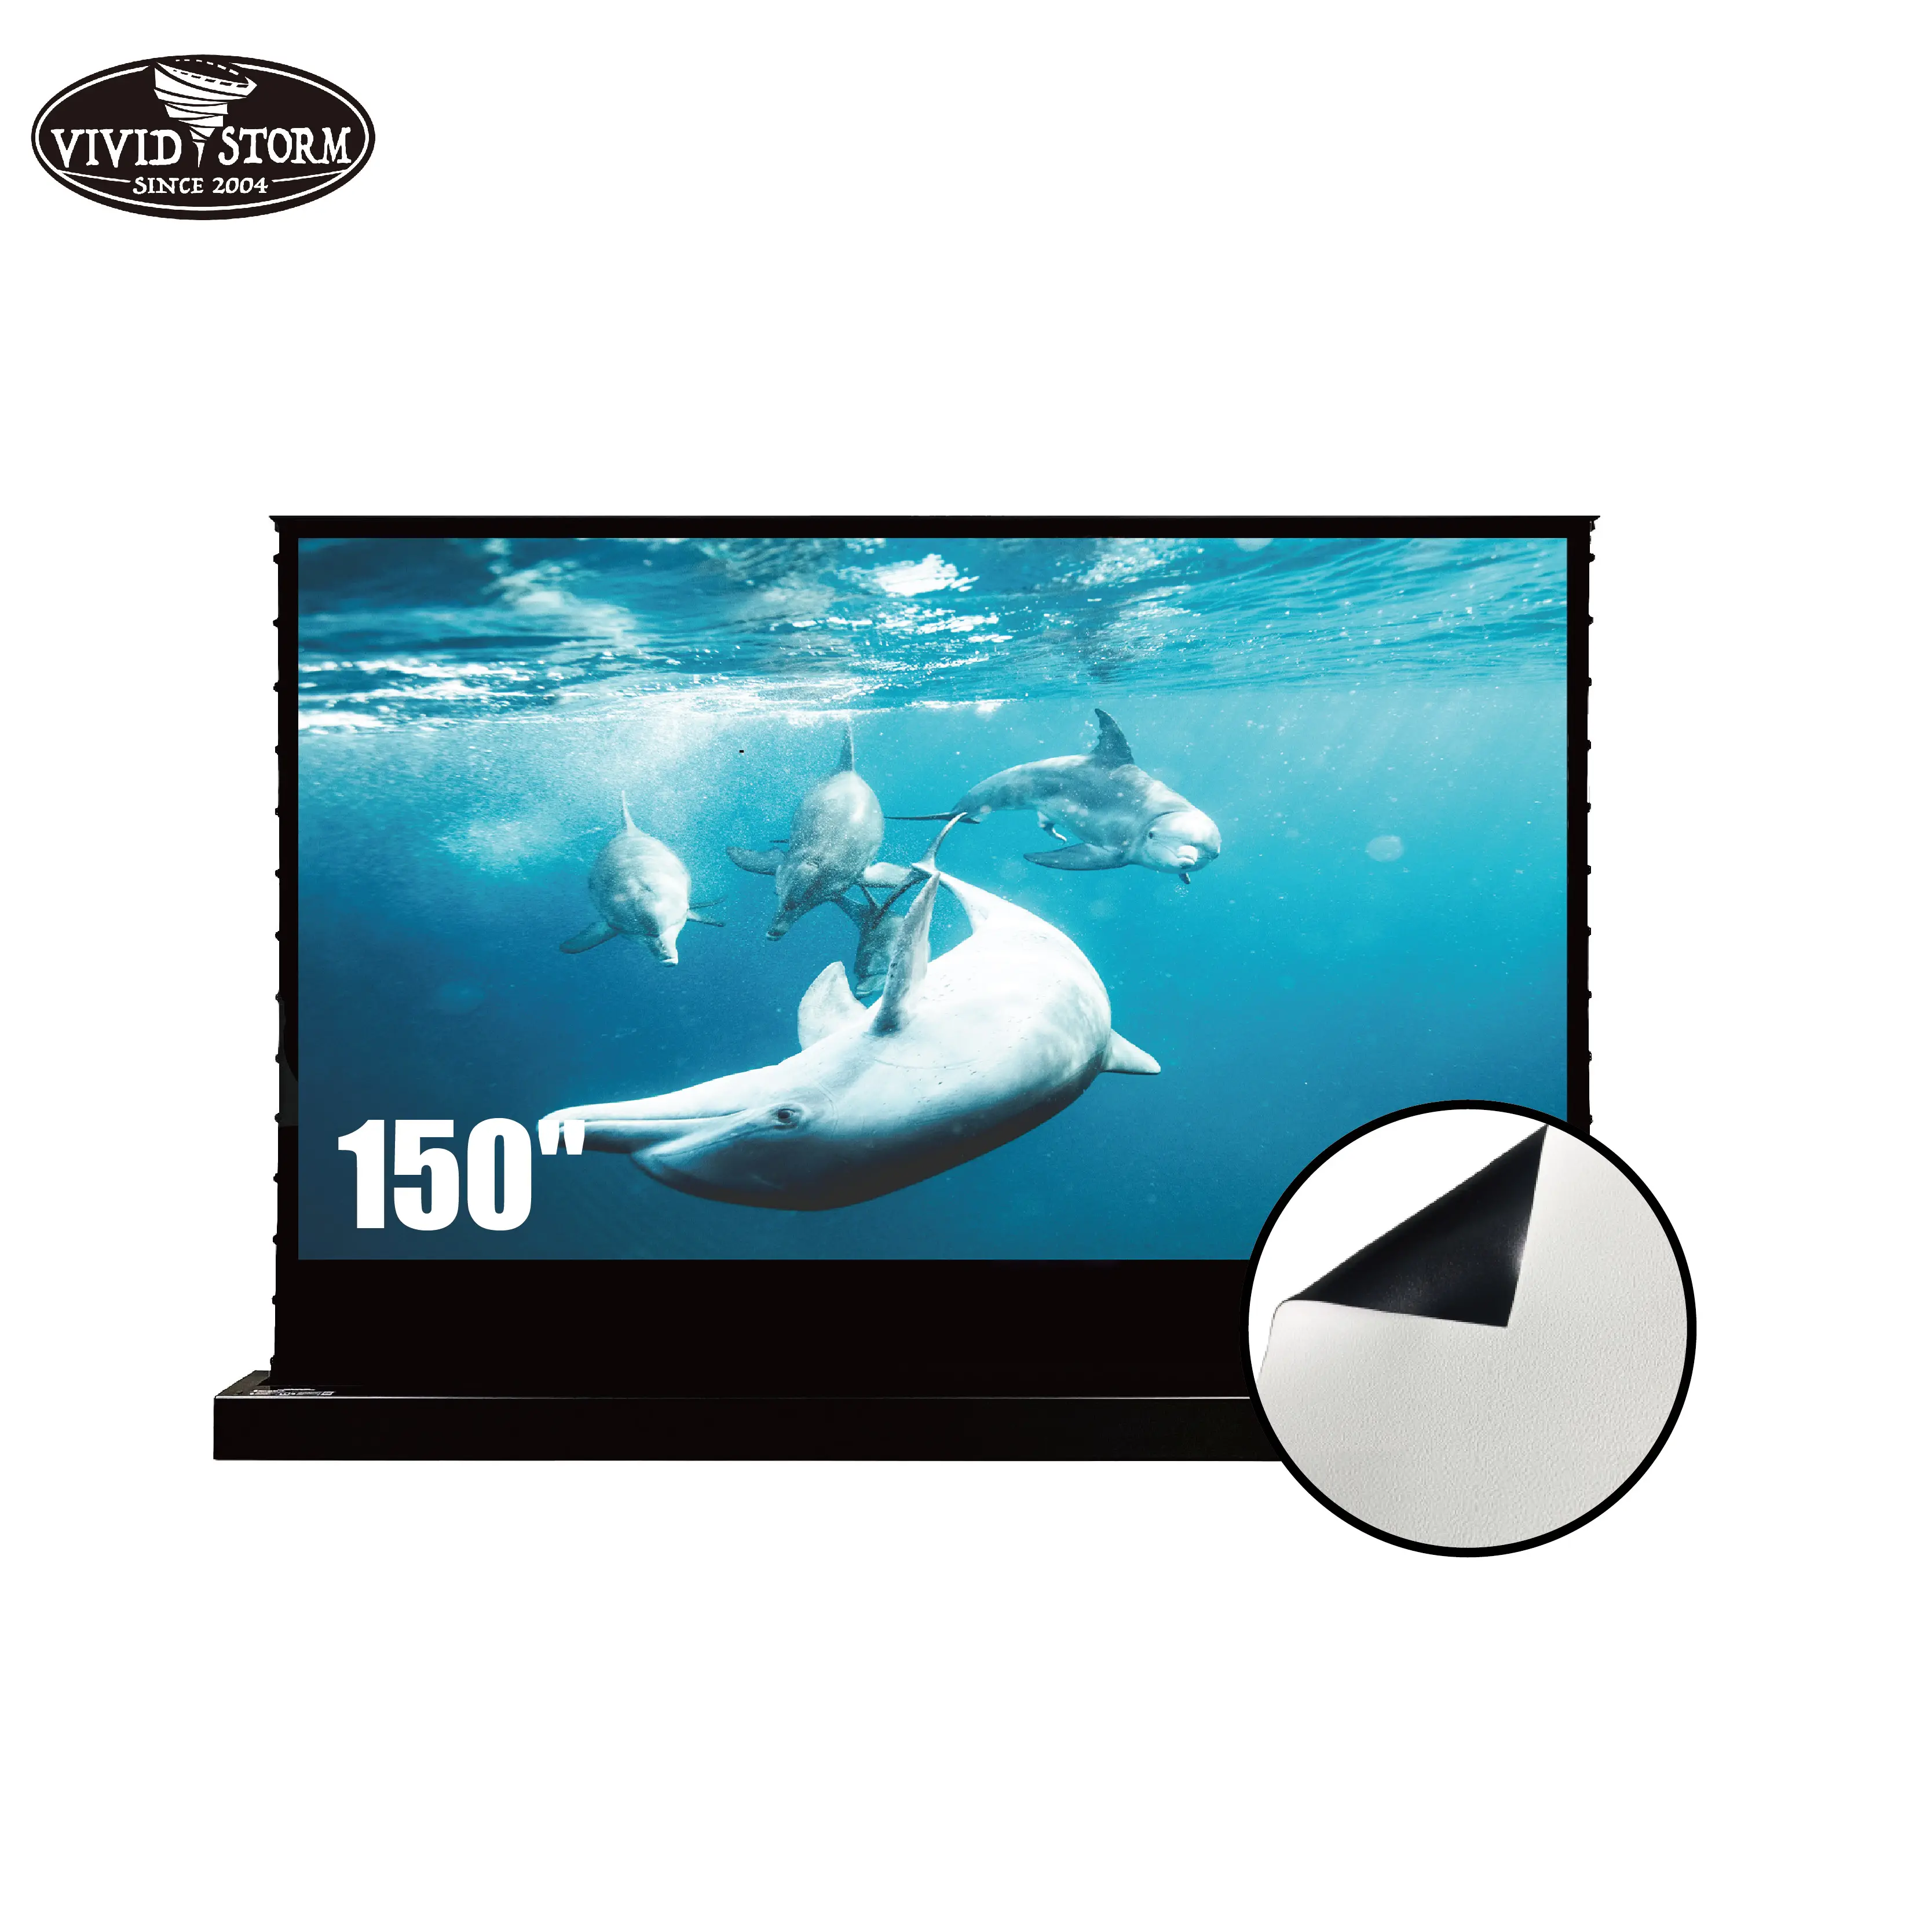 VIVIDSTORM 150 इंच 16:9 इलेक्ट्रिक टैब tensioned मंजिल स्क्रीन सिनेमा के साथ सफेद स्क्रीन सामग्री rollable पोर्टेबल स्टैंड स्क्रीन